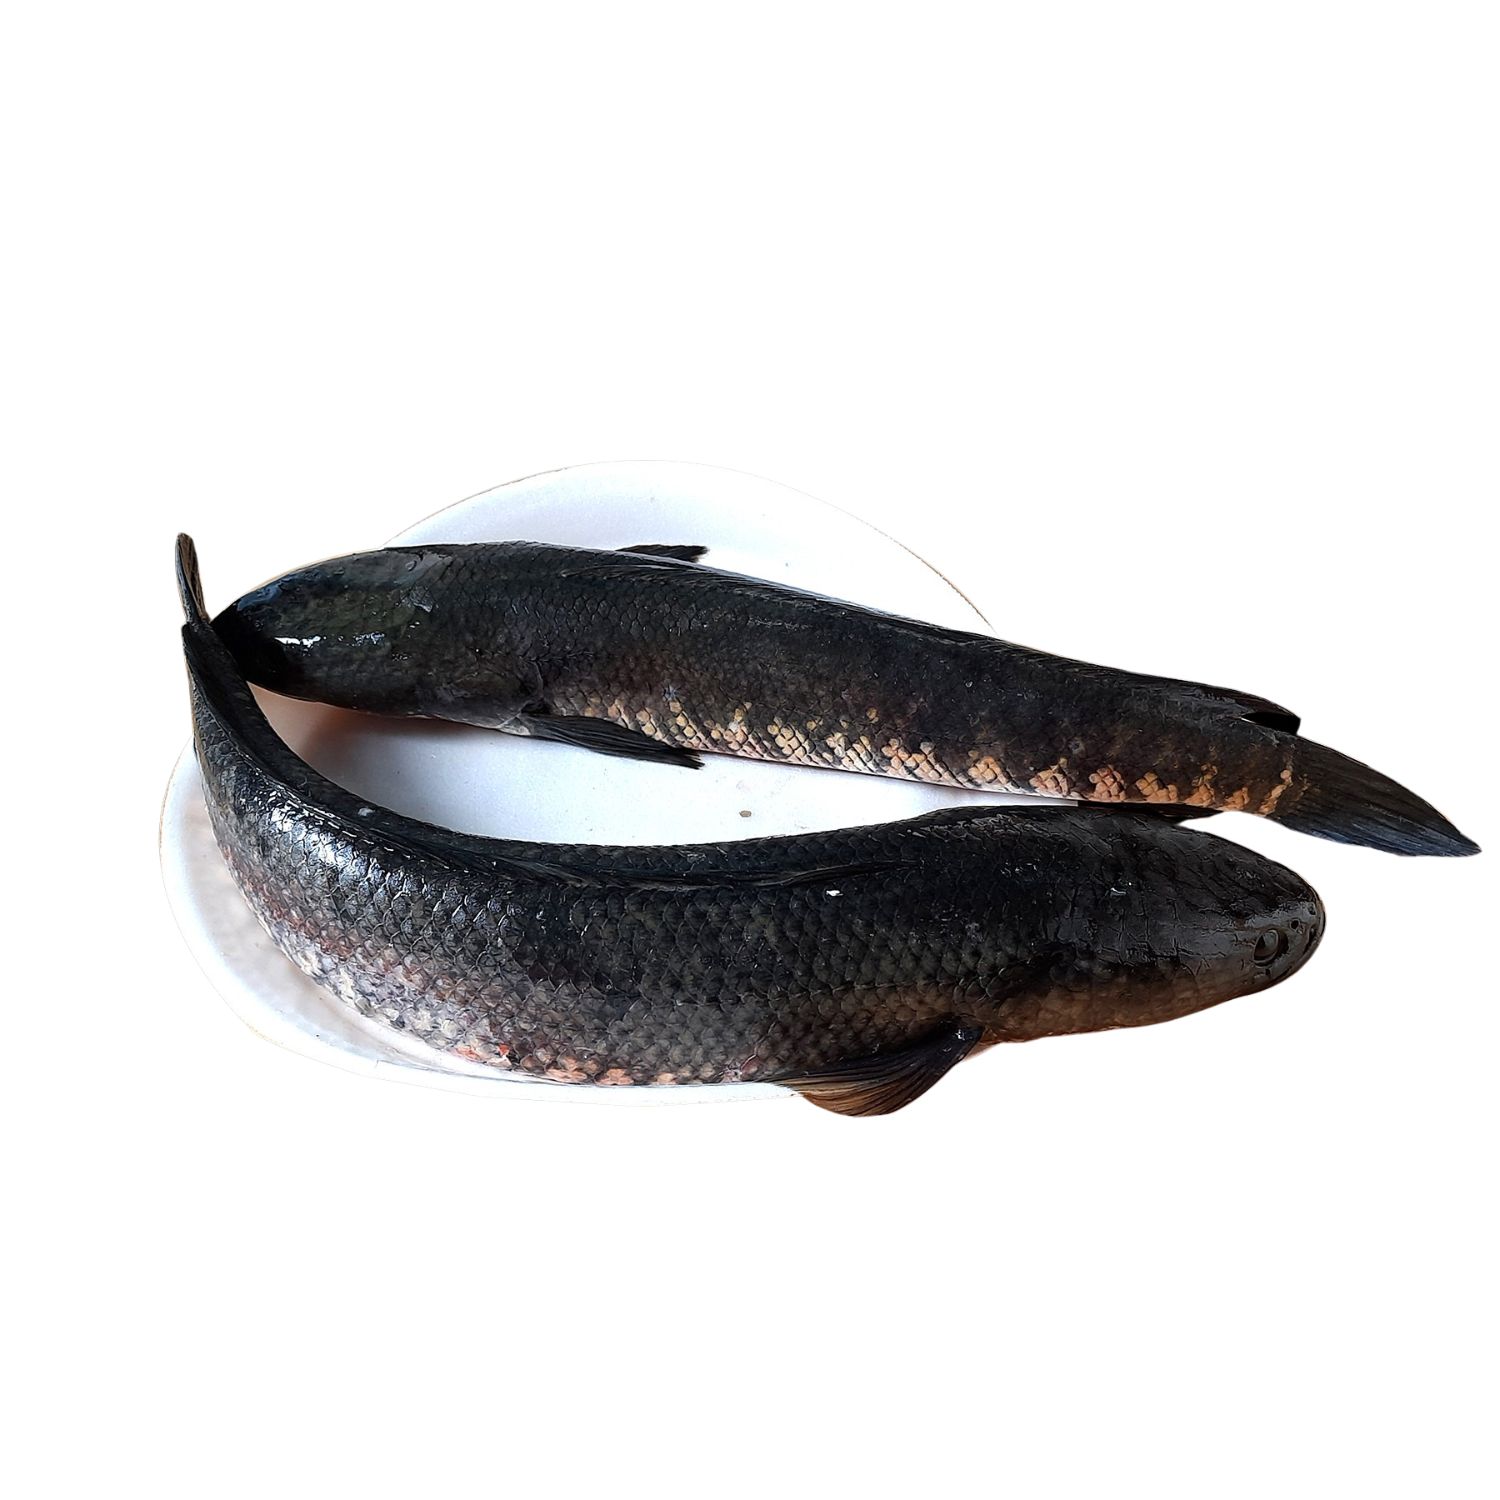 Shol Fish - Large Size, Whole, Cleaned